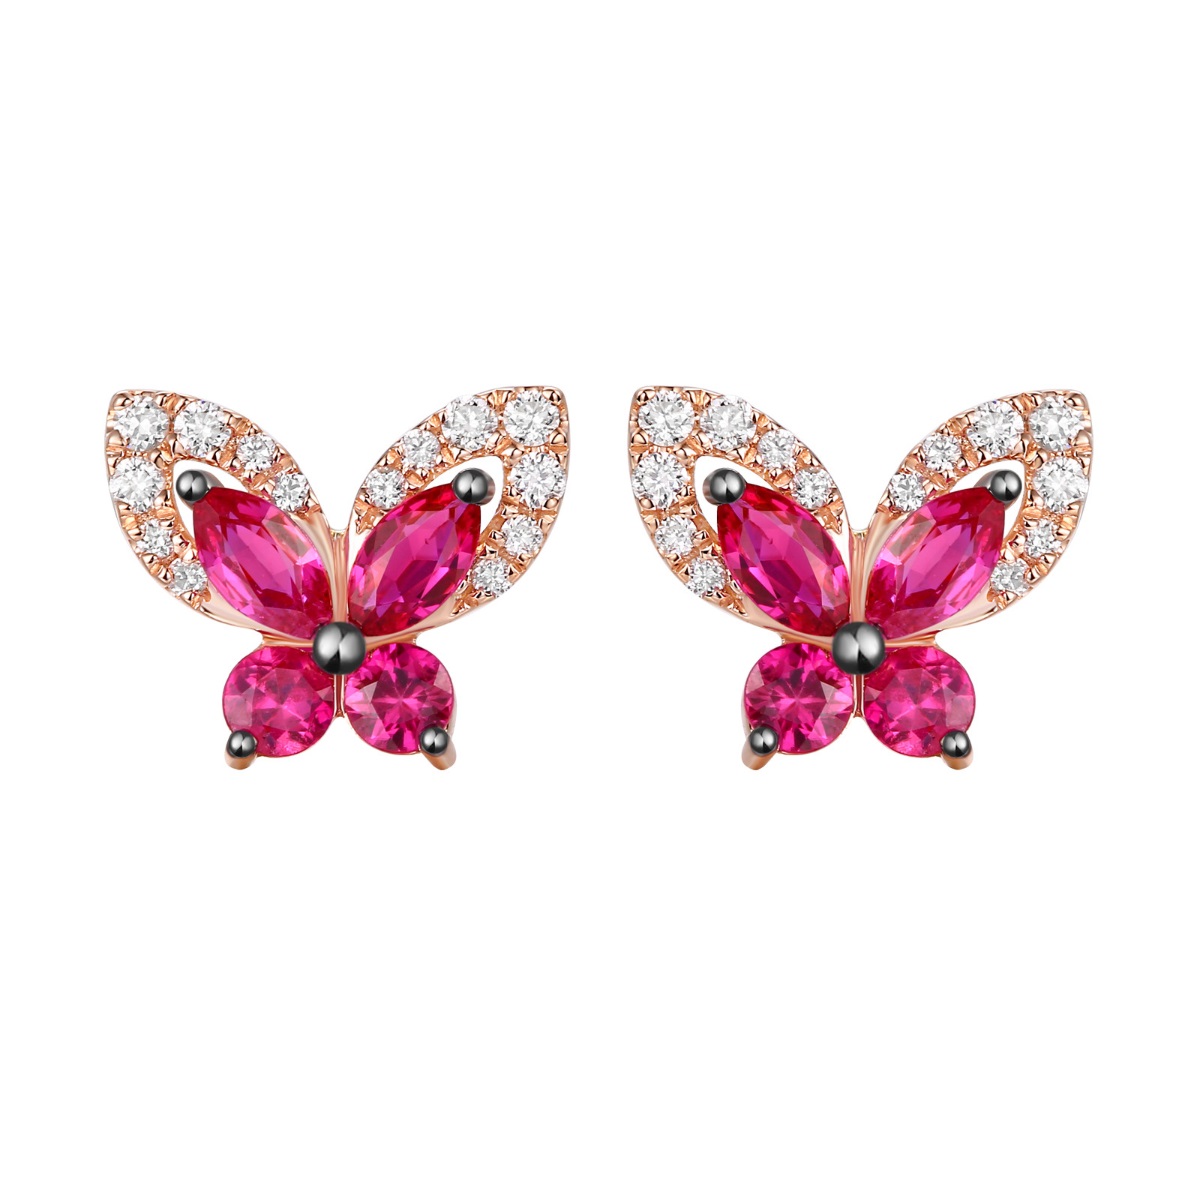 E36452RUW – 18K Rose Gold  Diamond and Gemstone Earring, 0.84 TCW